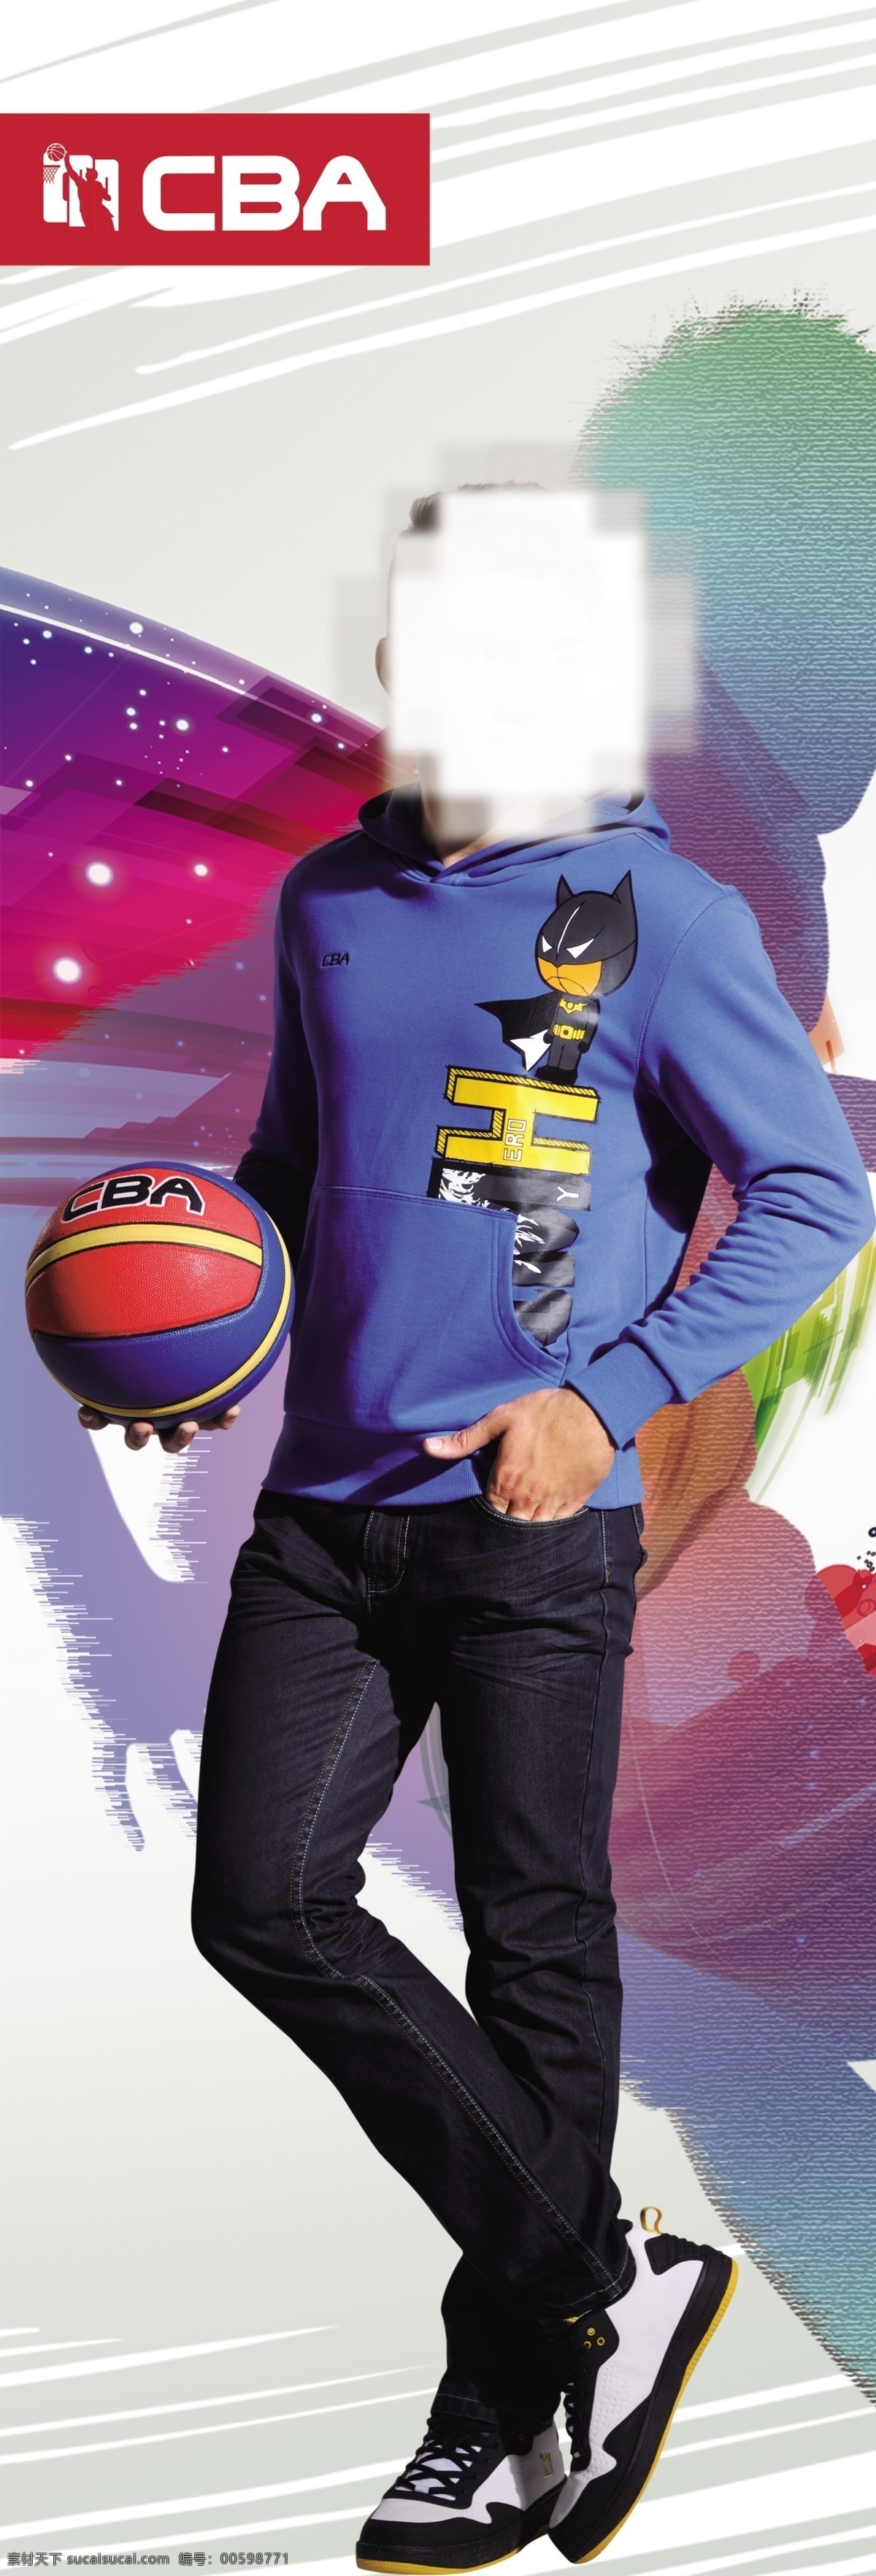 cba 服装 海报 cba服装 cba标志 标志标识 篮球 运动 运动套装 pop 广告设计模板 源文件 黑色